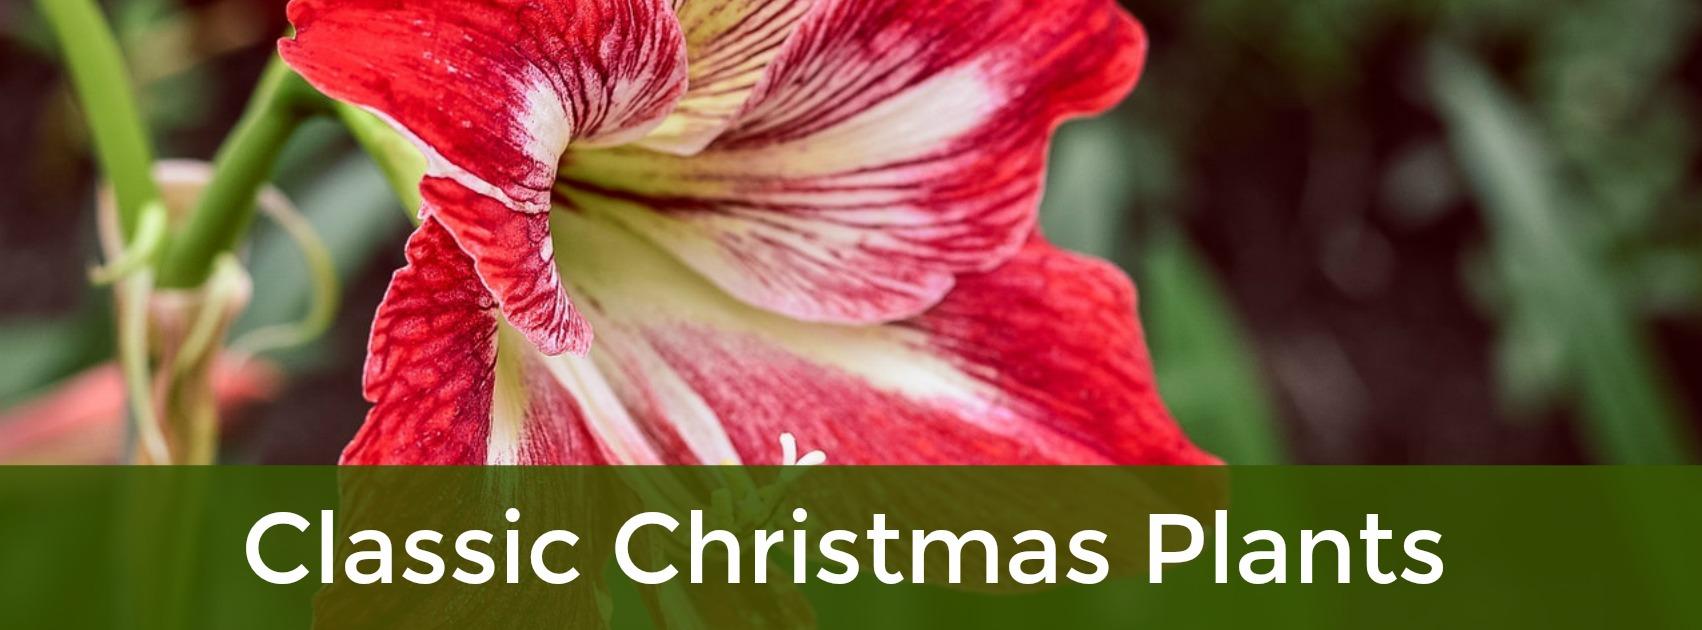 Classic Christmas Plants